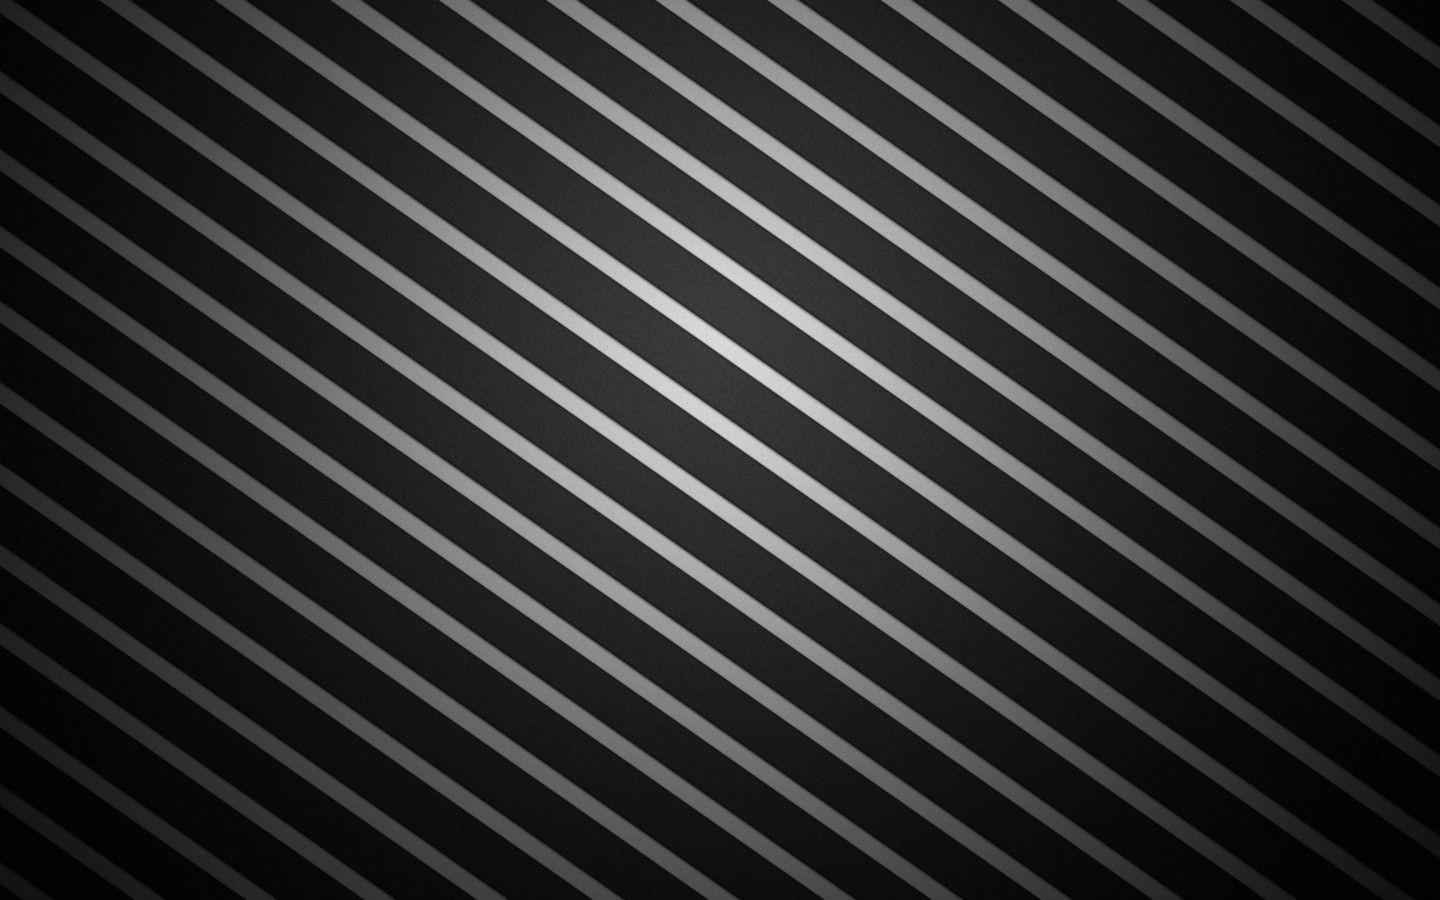 Silver and Black Abstract 4K Wallpaper. Free 4K Wallpaper